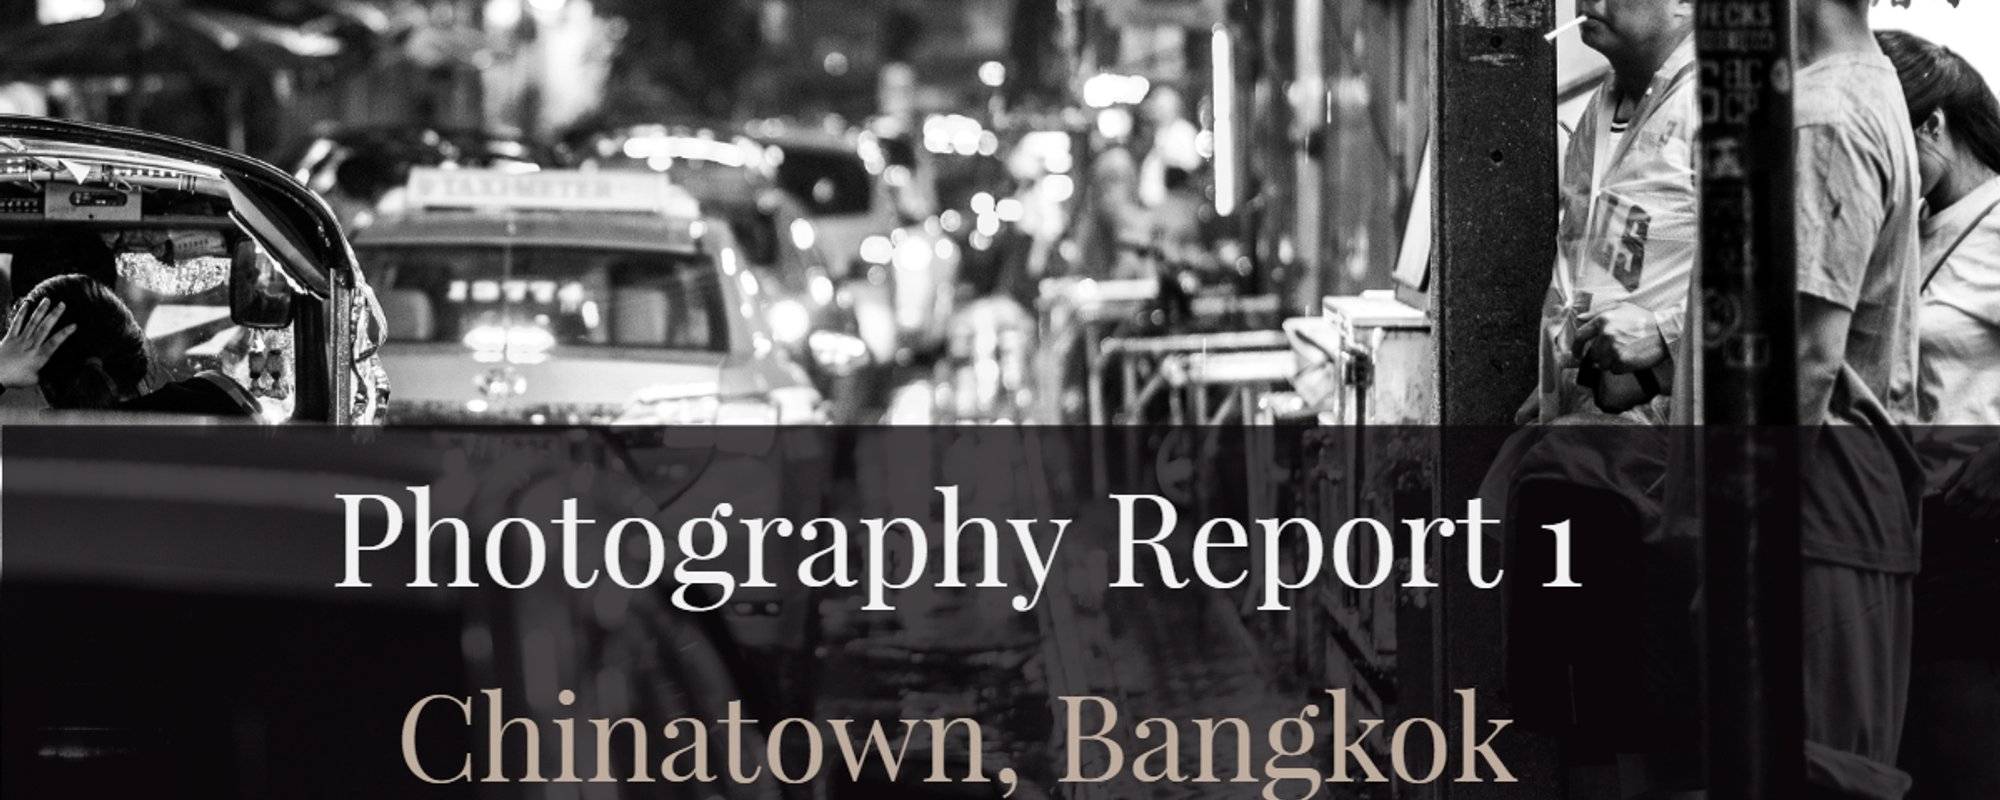 Photography Report 1 - Bangkok Street Photography